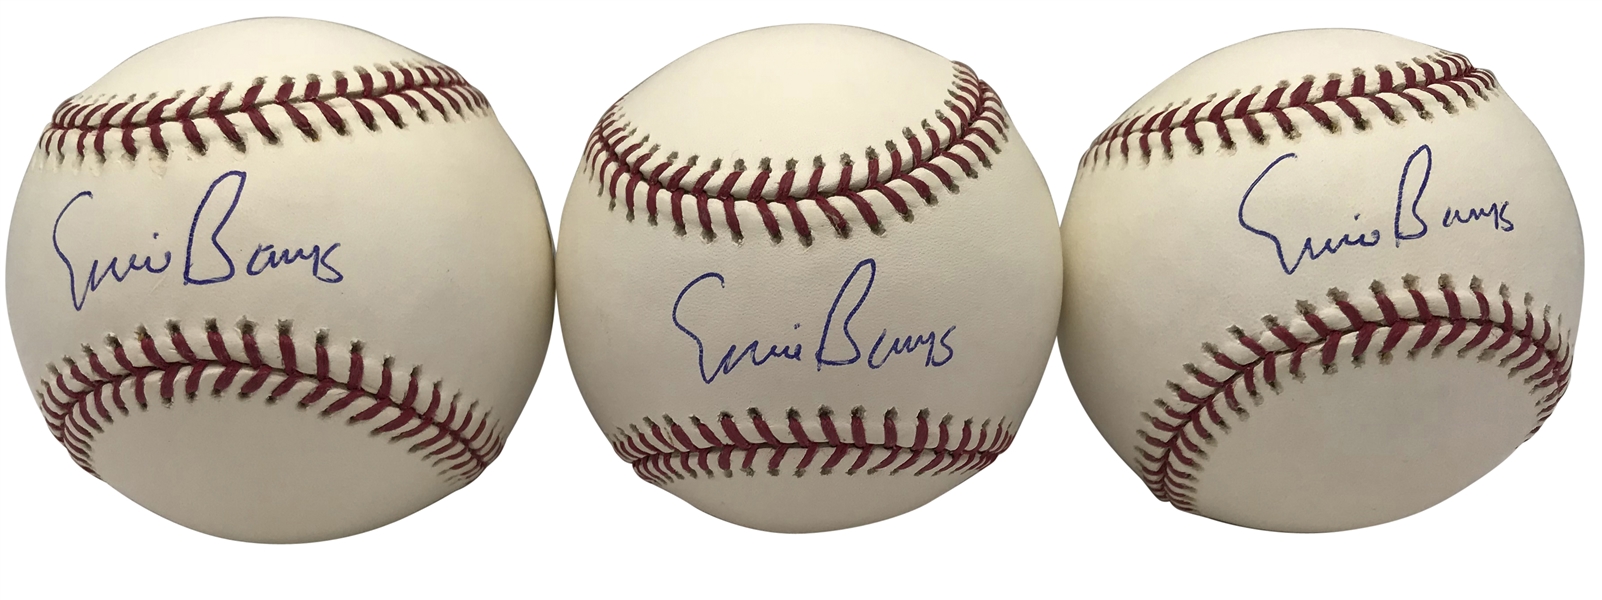 Ernie Banks Lot of Three (3) Signed OML Baseballs (Tristar)